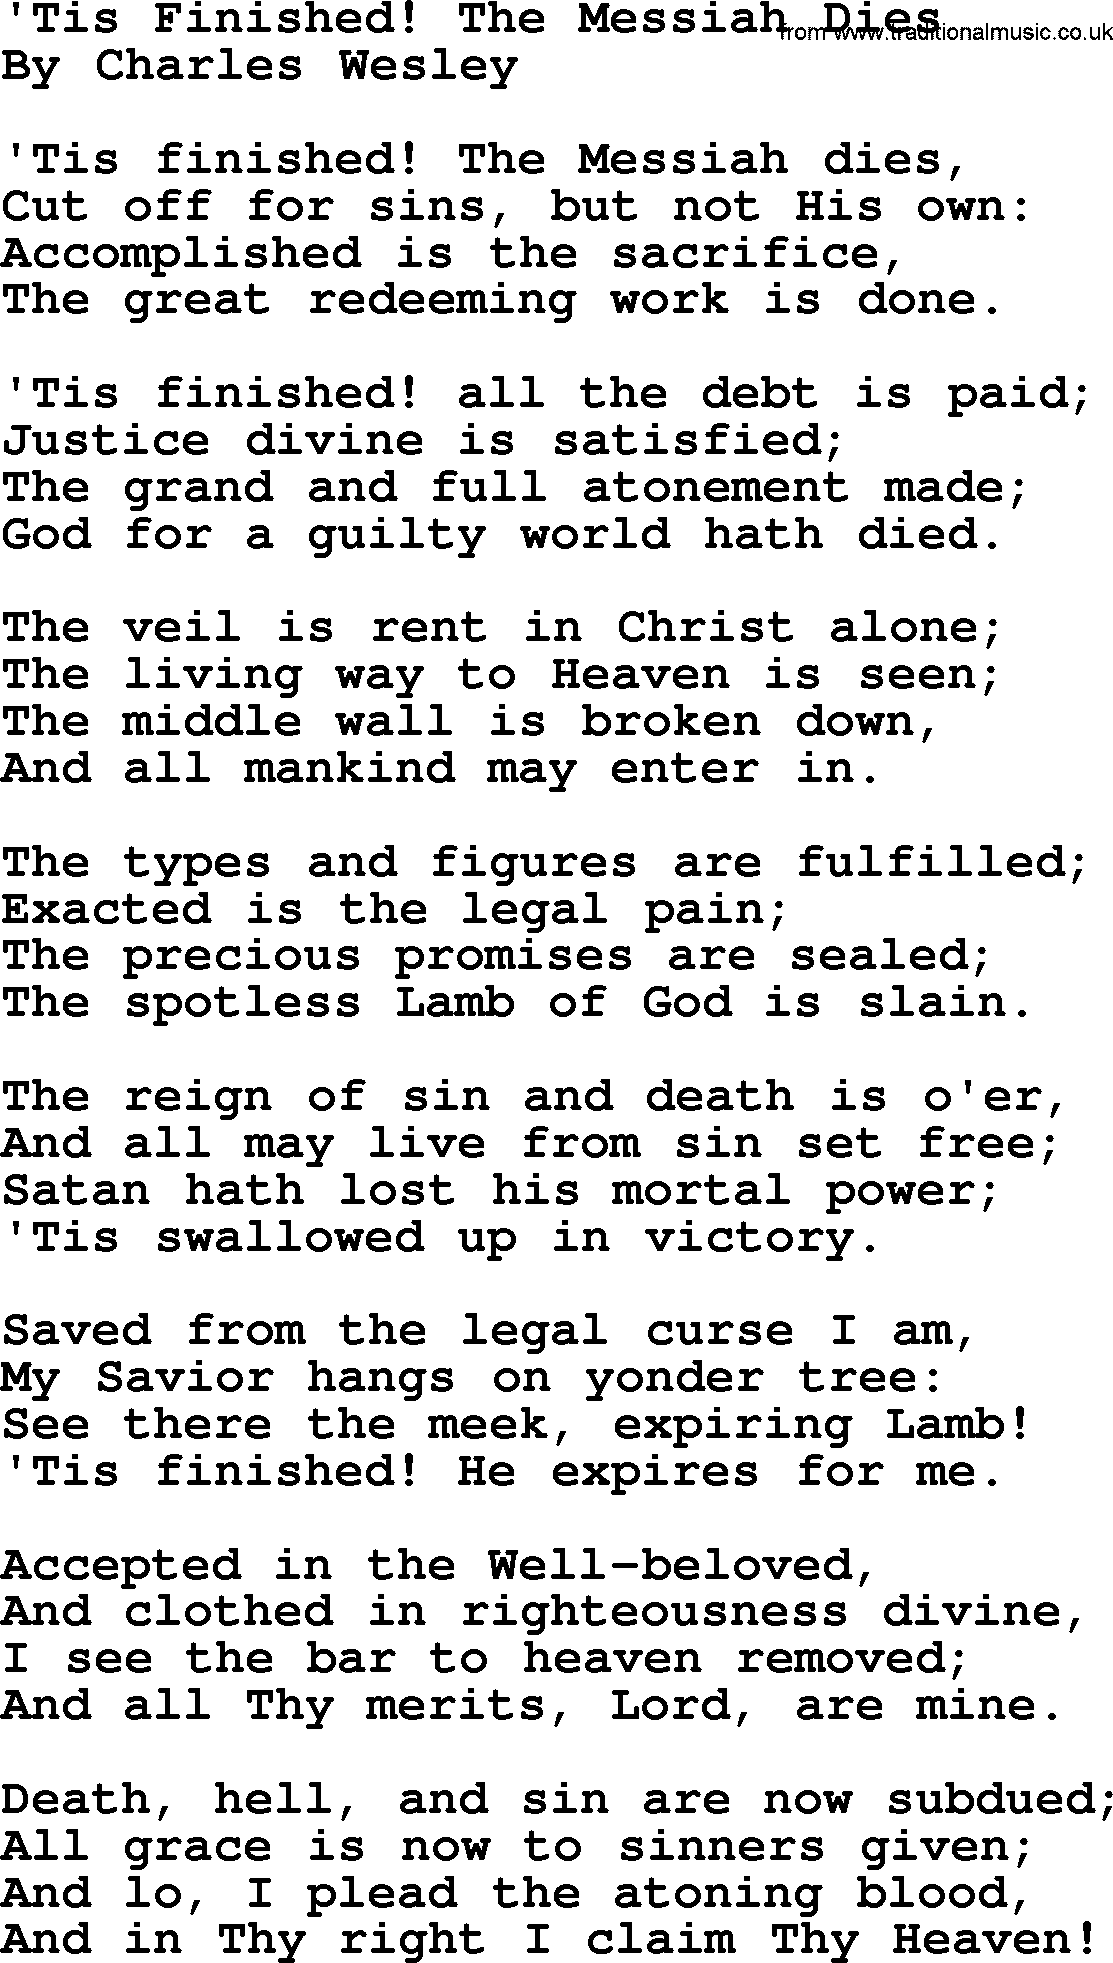 Charles Wesley hymn: Tis Finished! The Messiah Dies, lyrics